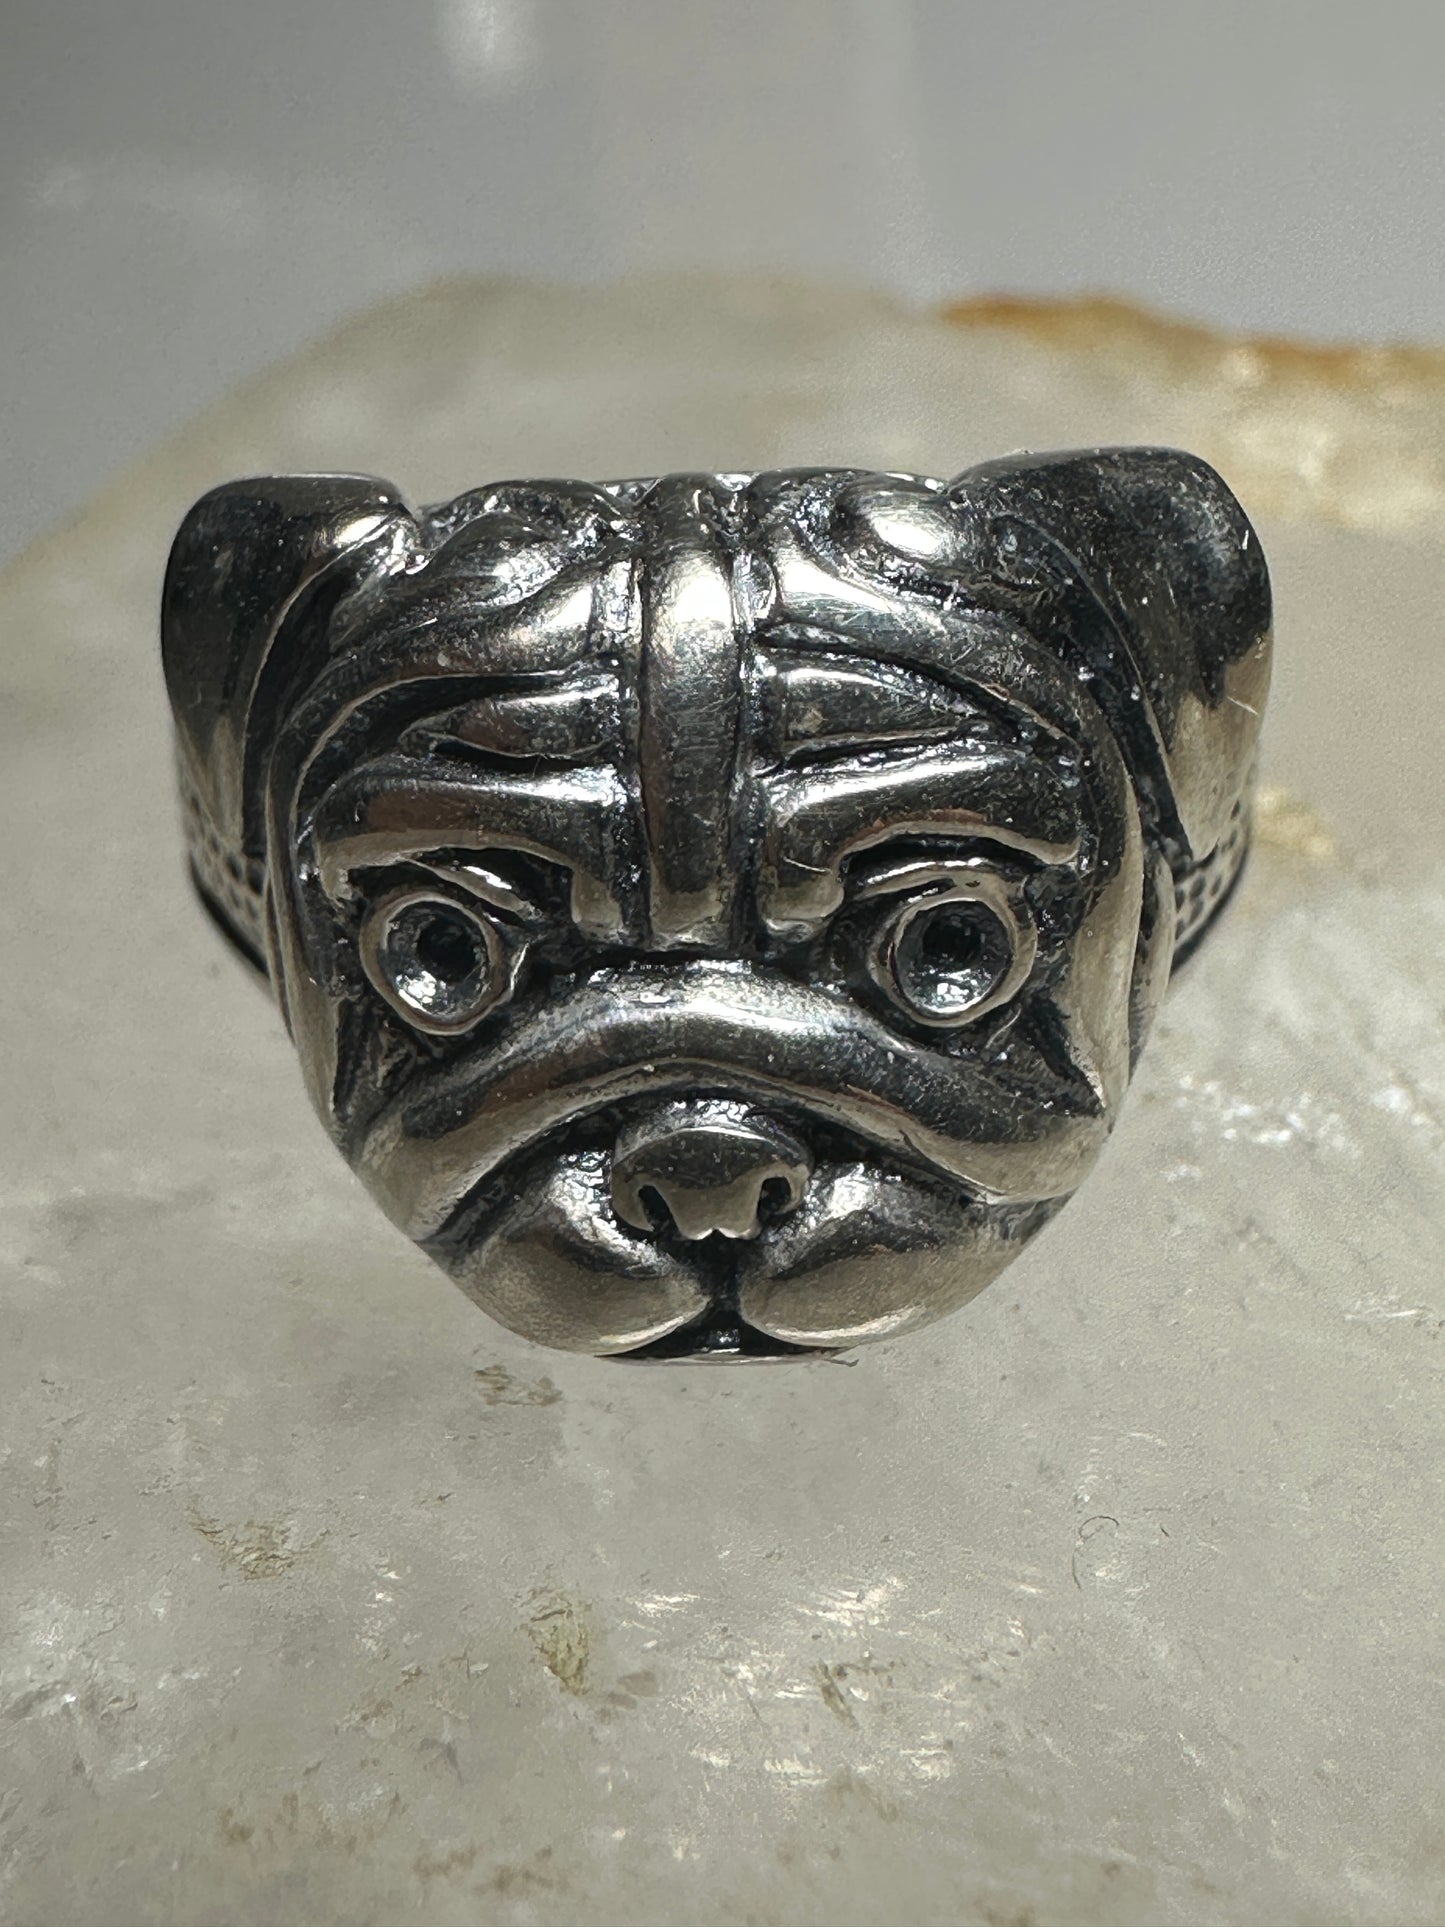 Bulldog ring dog band size 9.75 sterling silver women men